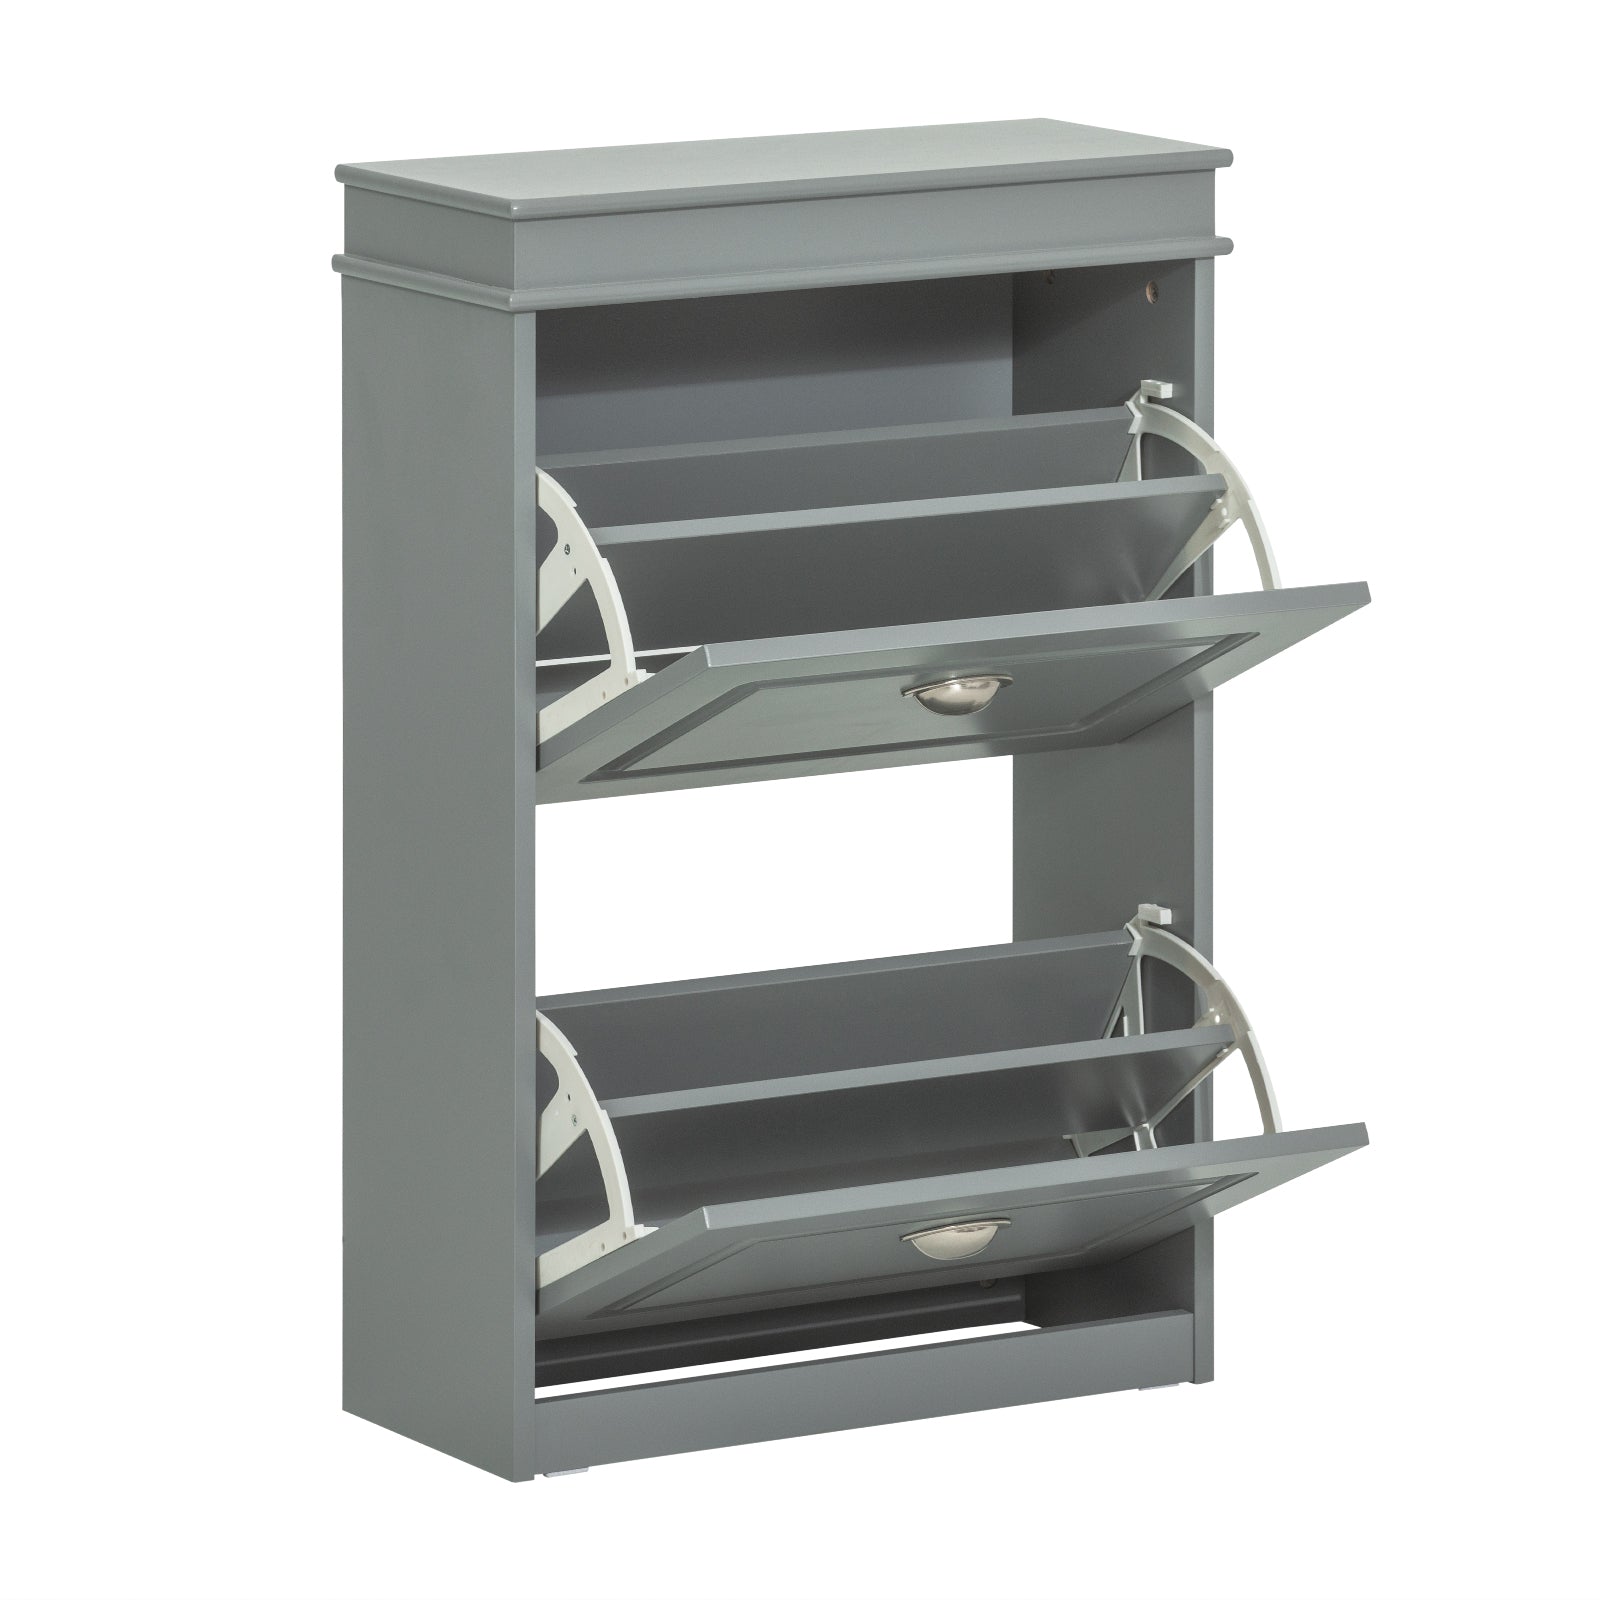 SoBuy FSR78-HG, Grey 2 Drawers Shoe Cabinet Shoe Rack Shoe Storage Cupboard Organizer Unit